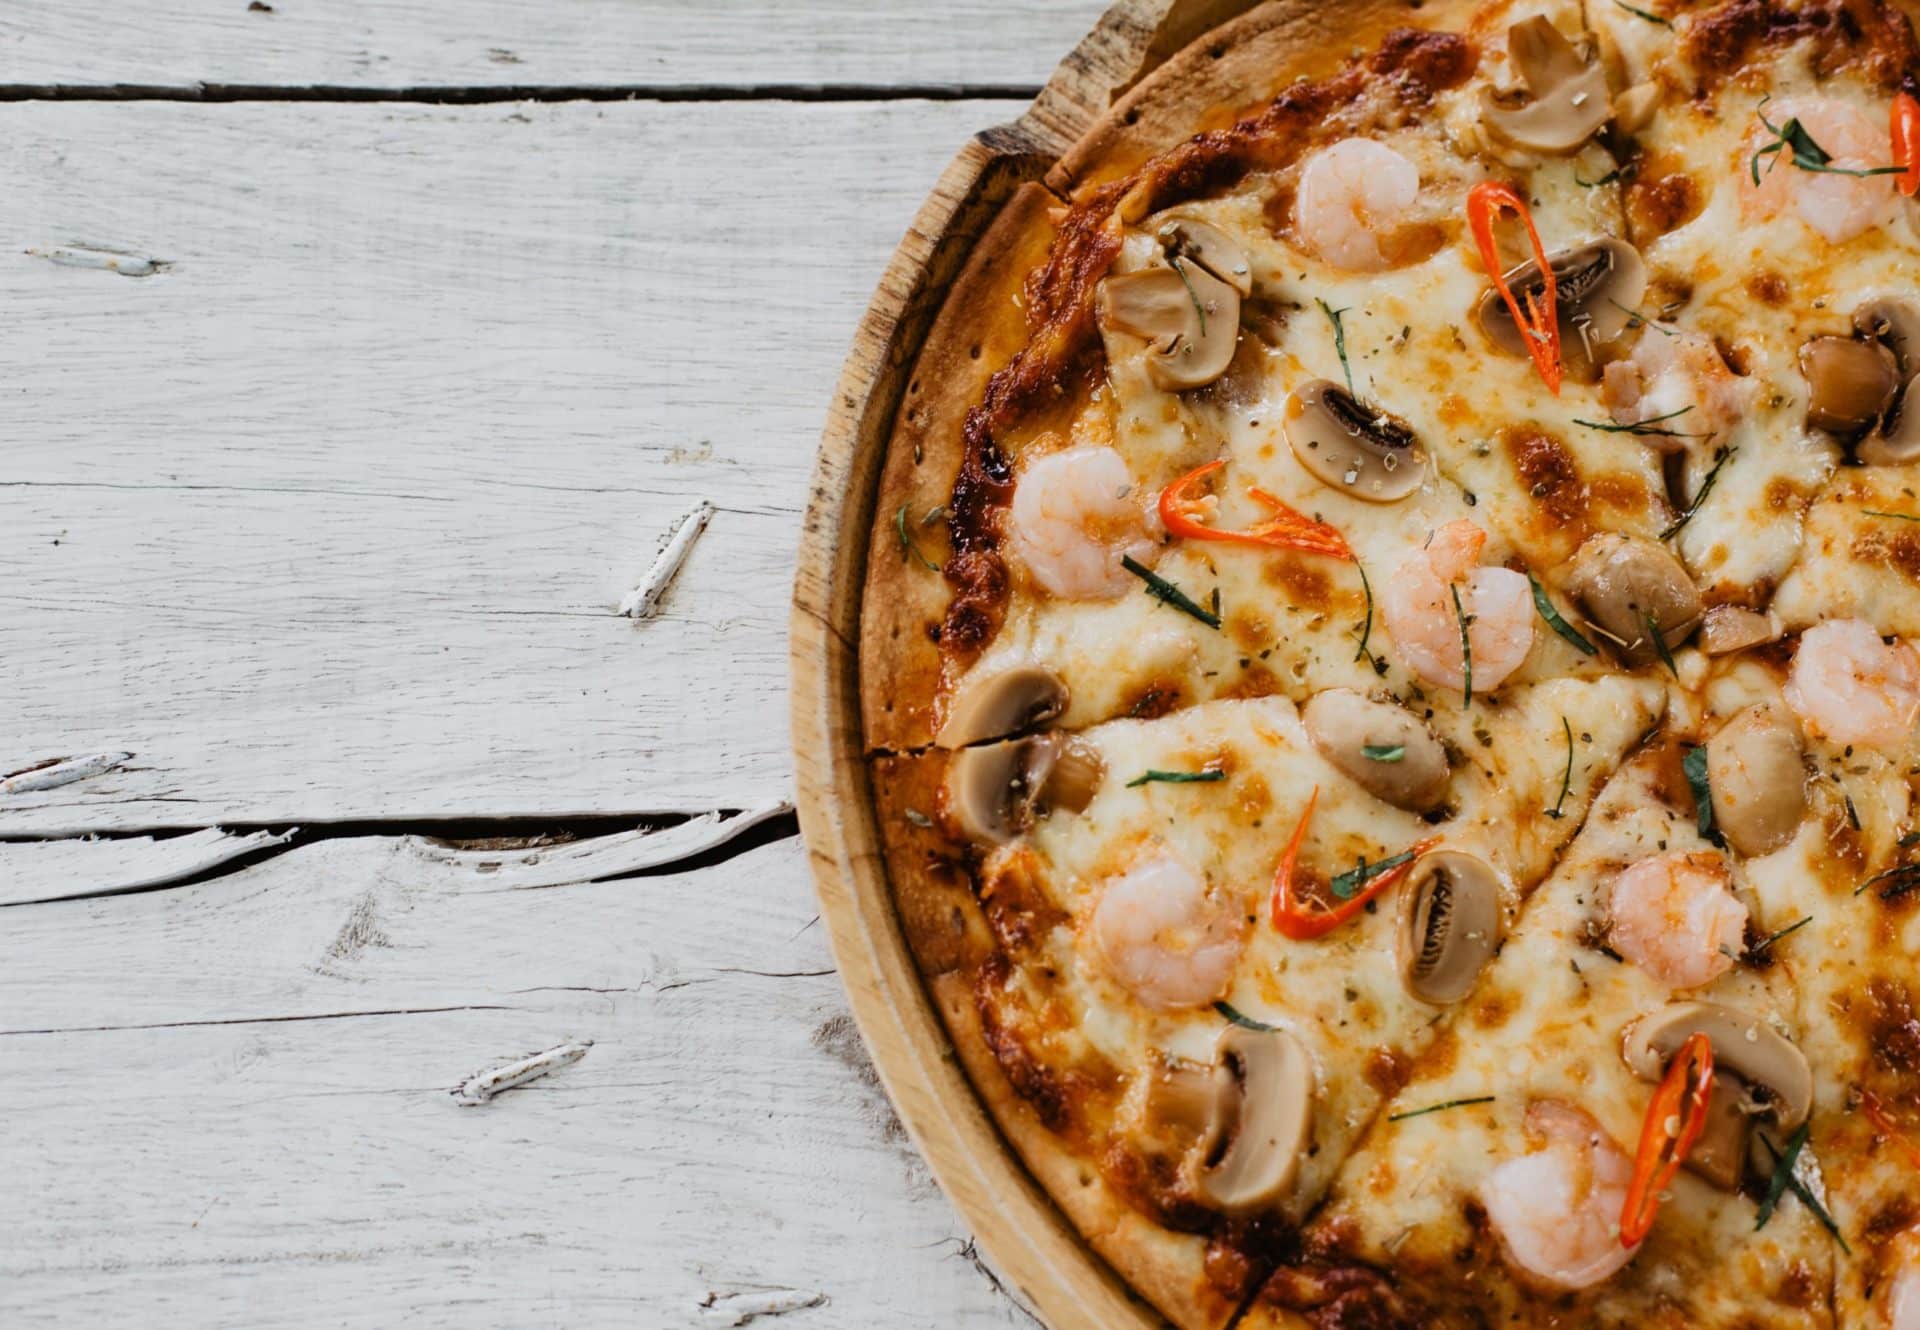 Mushroom pizza with shrimp